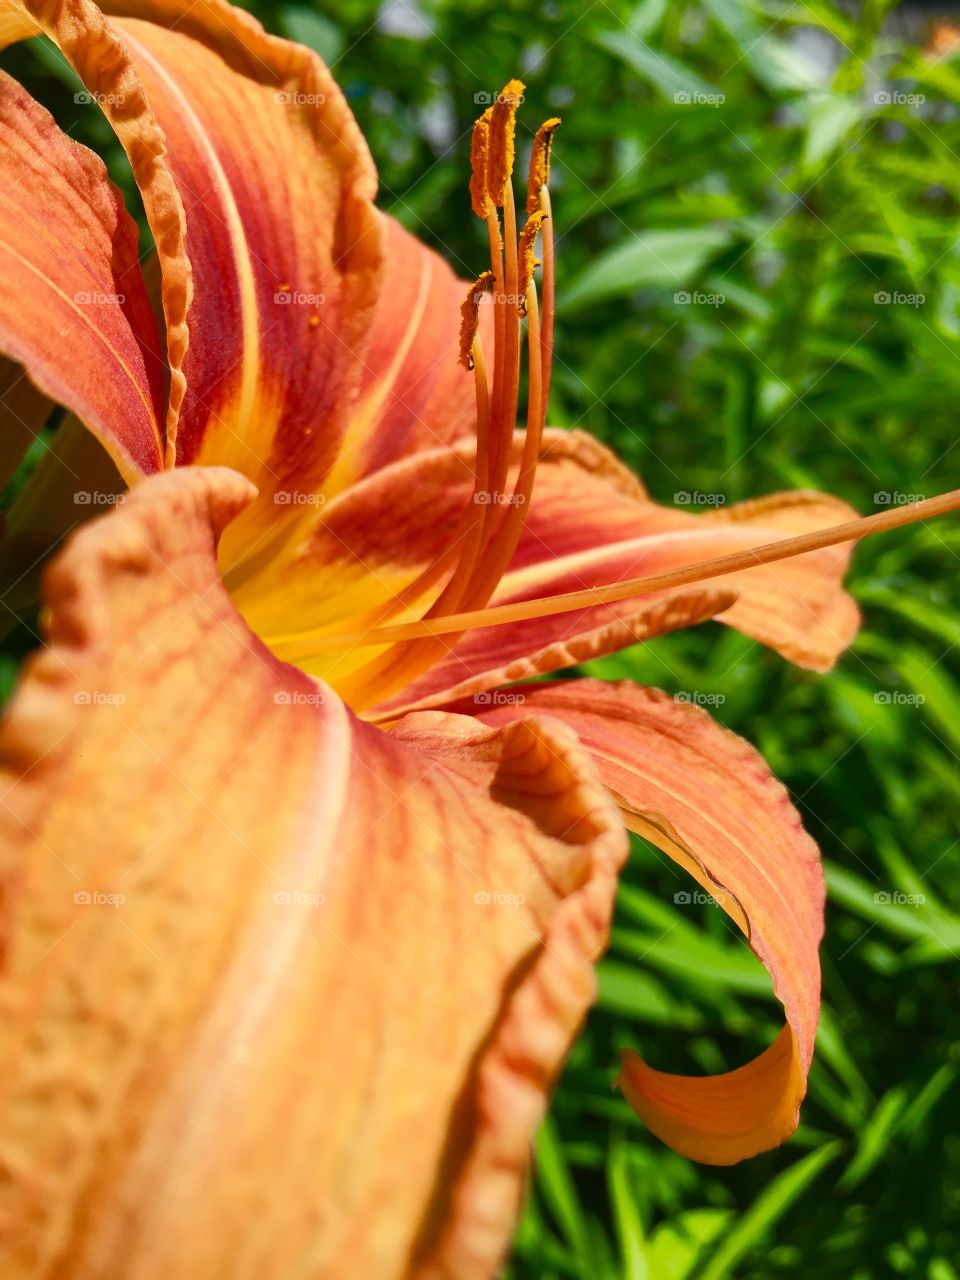 Orange flower close up